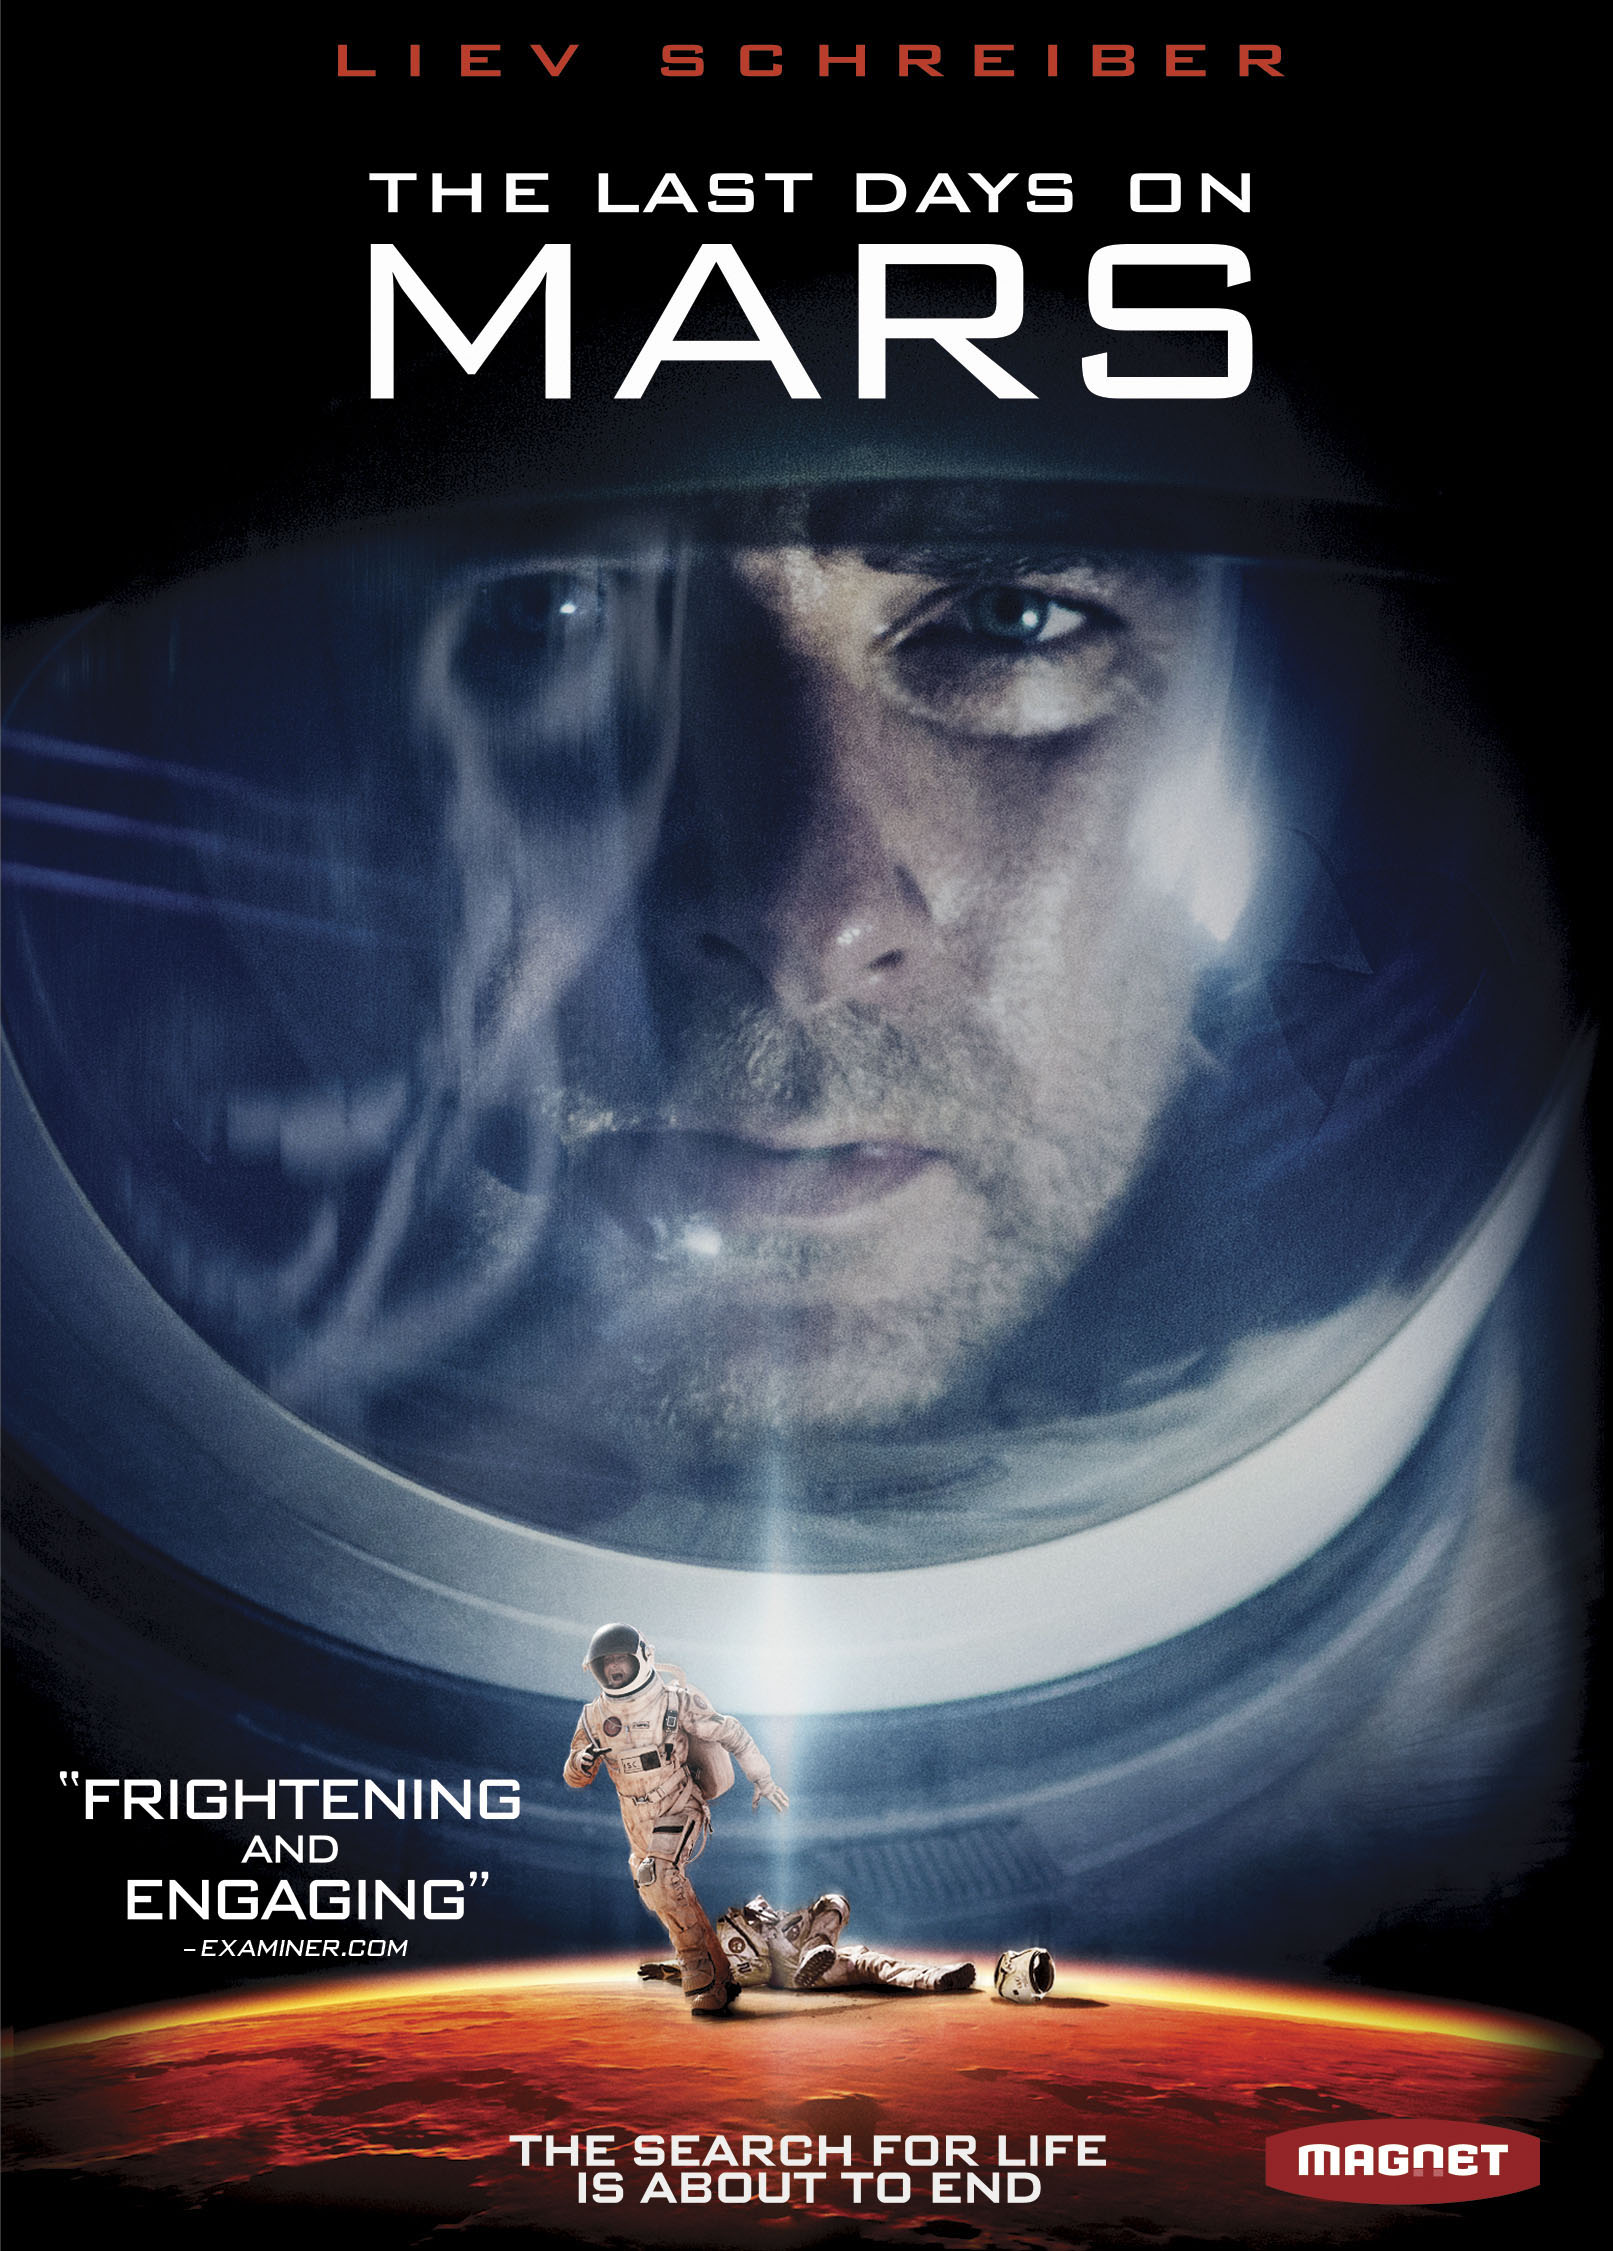 The　Best　Last　Days　Buy　[DVD]　on　Mars　[2013]